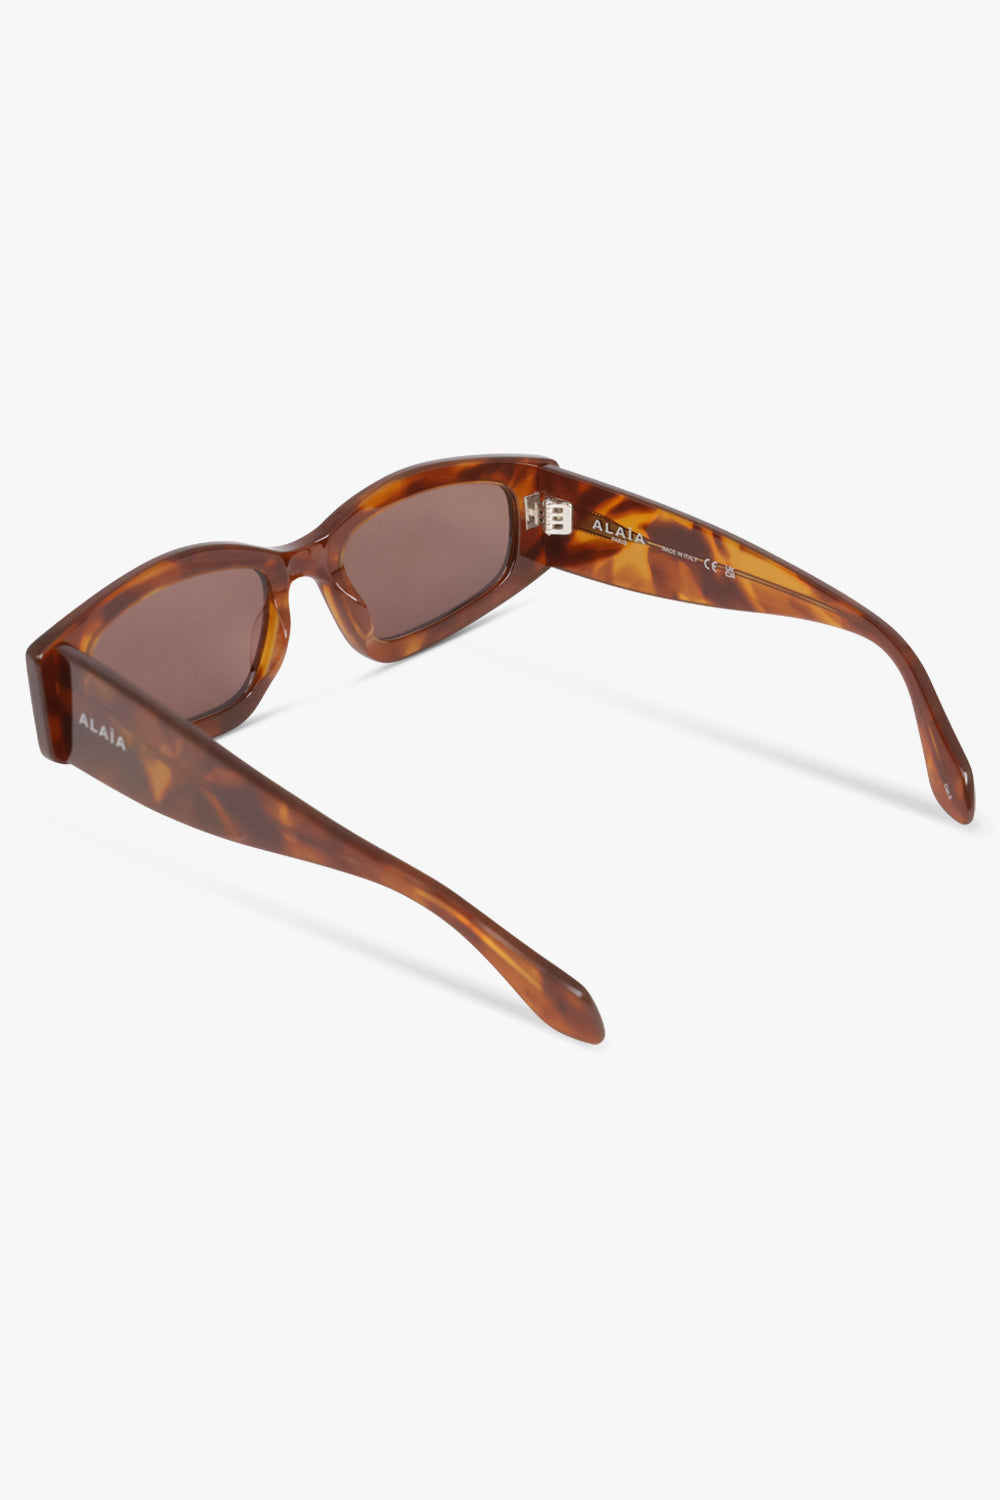 ALAIA ACCESSORIES BROWN / HAVANA/BROWN / ONE SIZE Directional Sunglasses | Havana/Brown